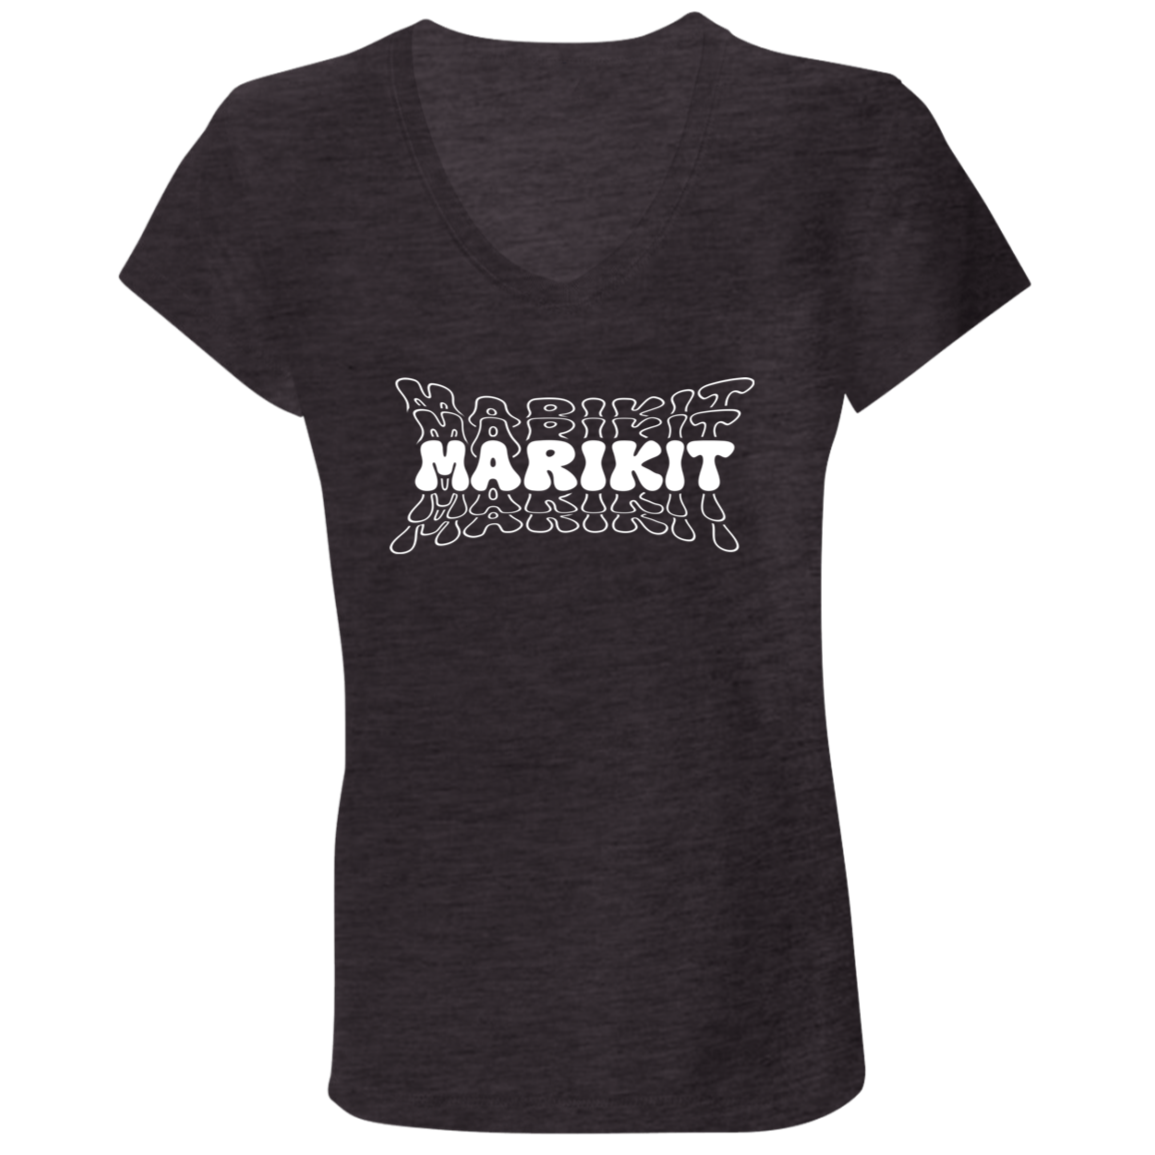 Marikit Ladies Jersey V-Neck T-Shirt